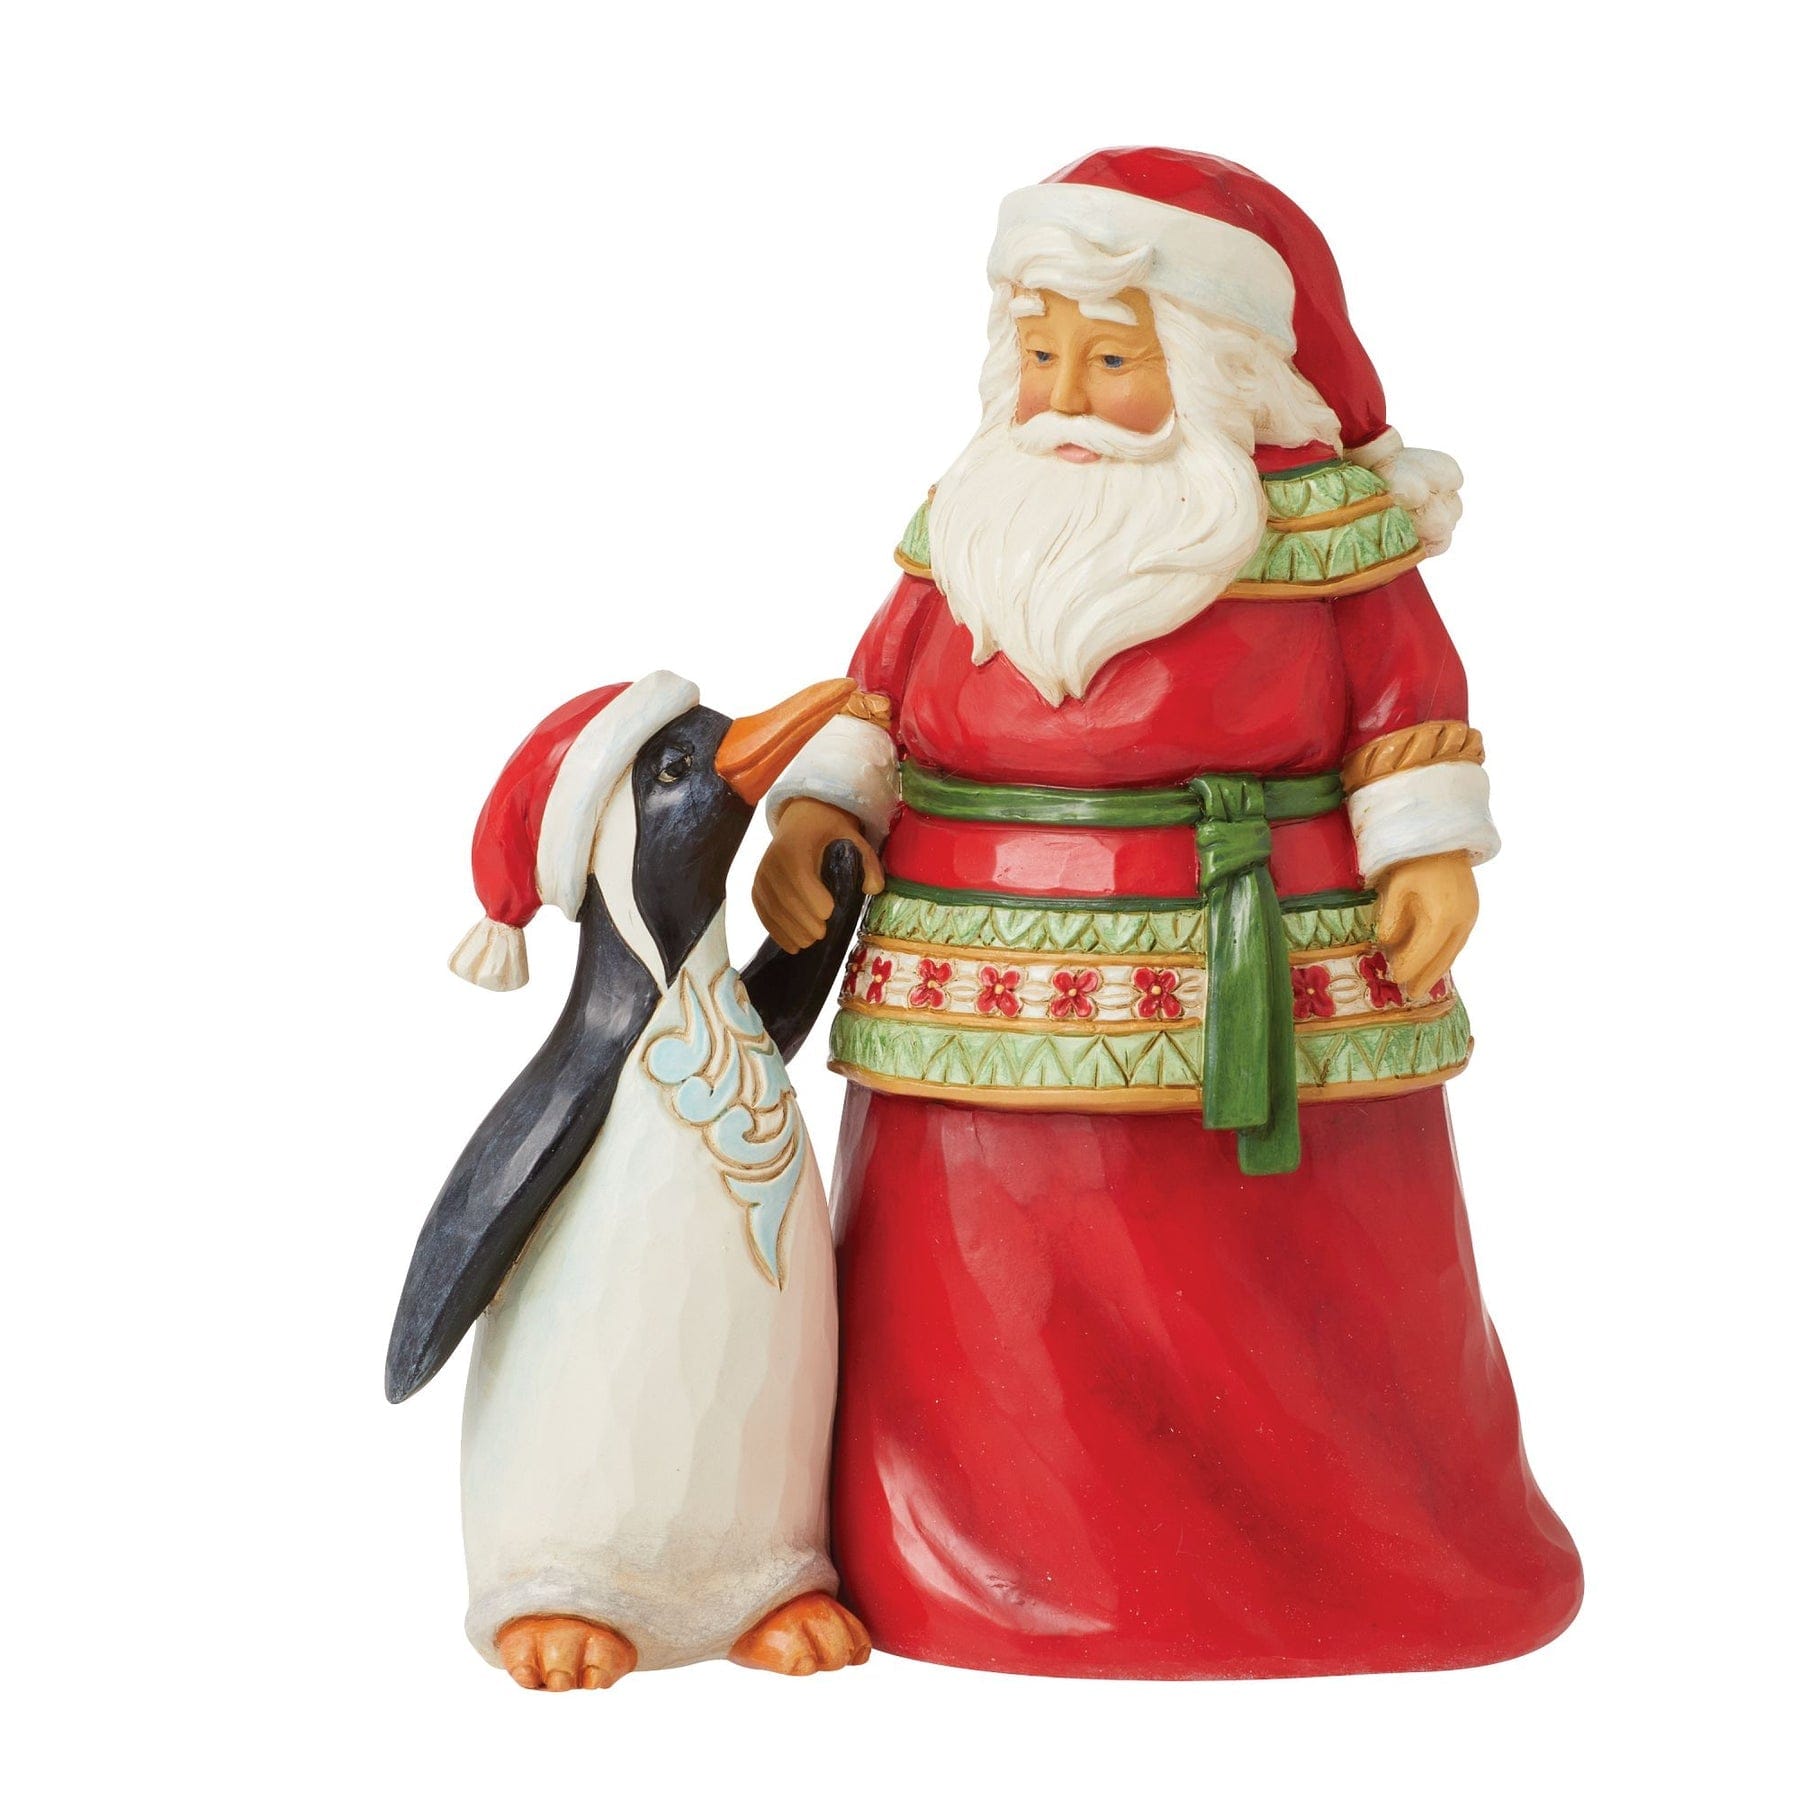 Jim Shore Figurine Jim Shore - Pint Sized Santa with Buddy - Christmas Figurine